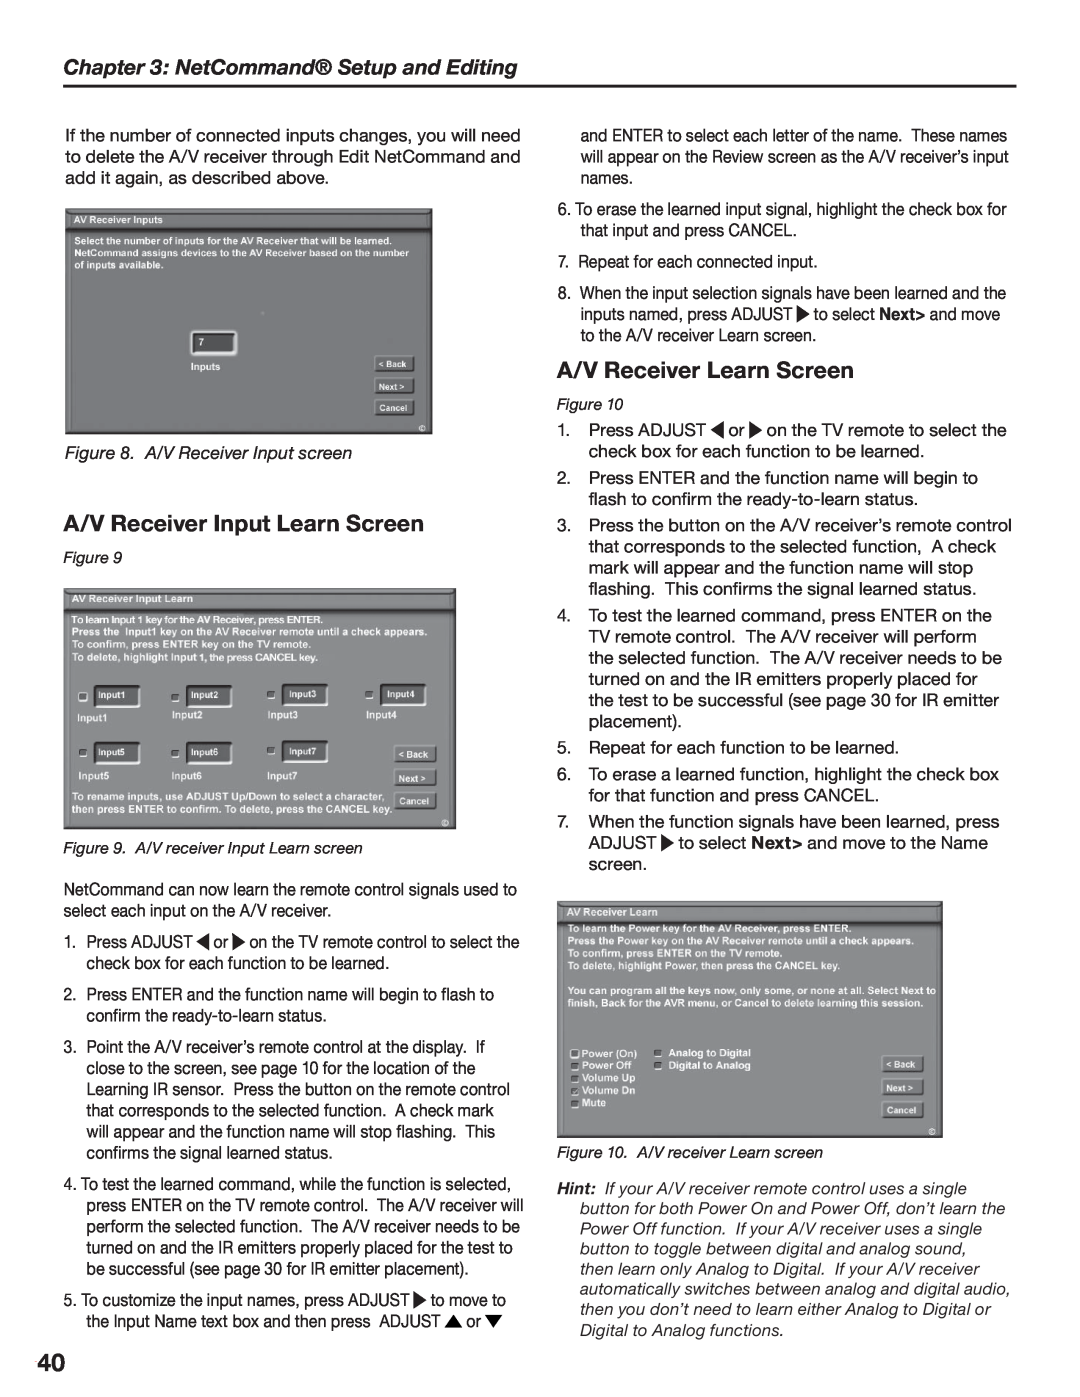 Mitsubishi Electronics LT-3280 A/V Receiver Input Learn Screen, A/V Receiver Learn Screen, NetCommand Setup and Editing 